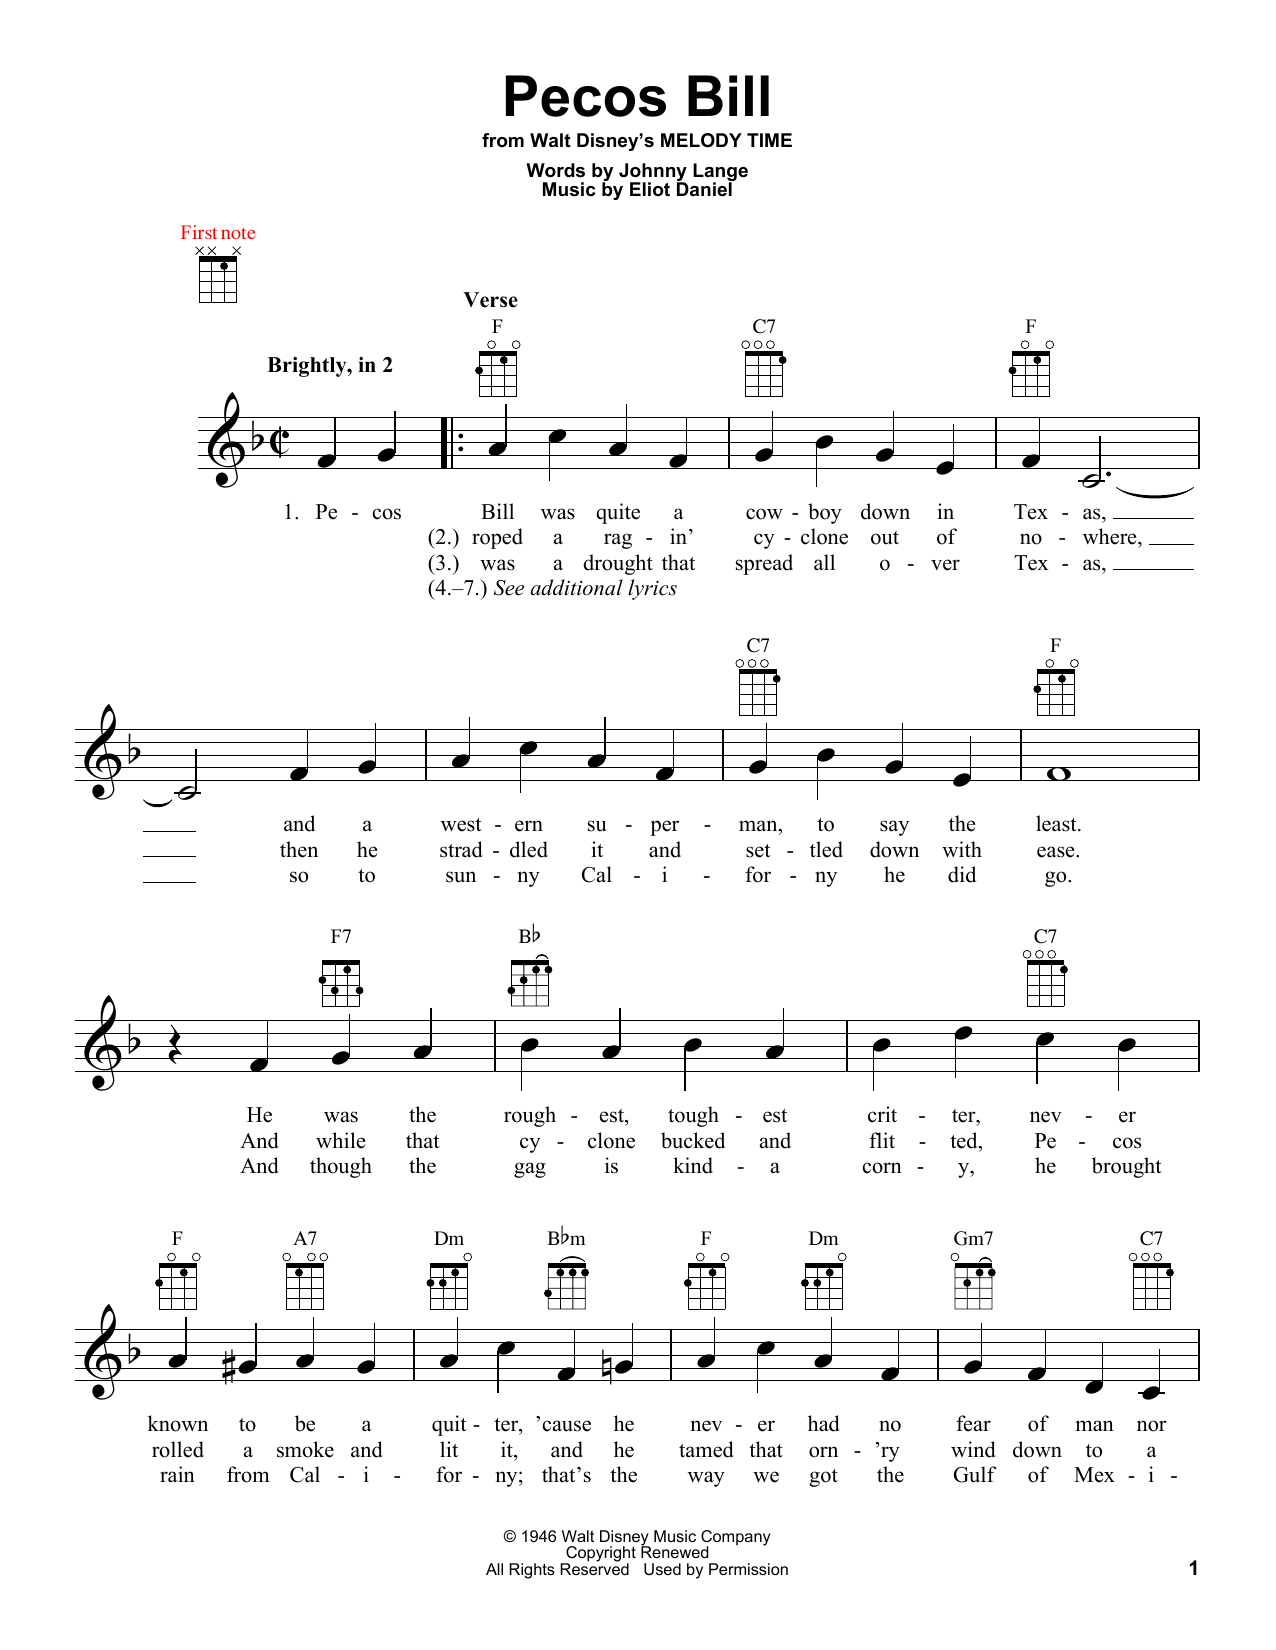 Eliot Daniel Pecos Bill Sheet Music Notes & Chords for Ukulele - Download or Print PDF